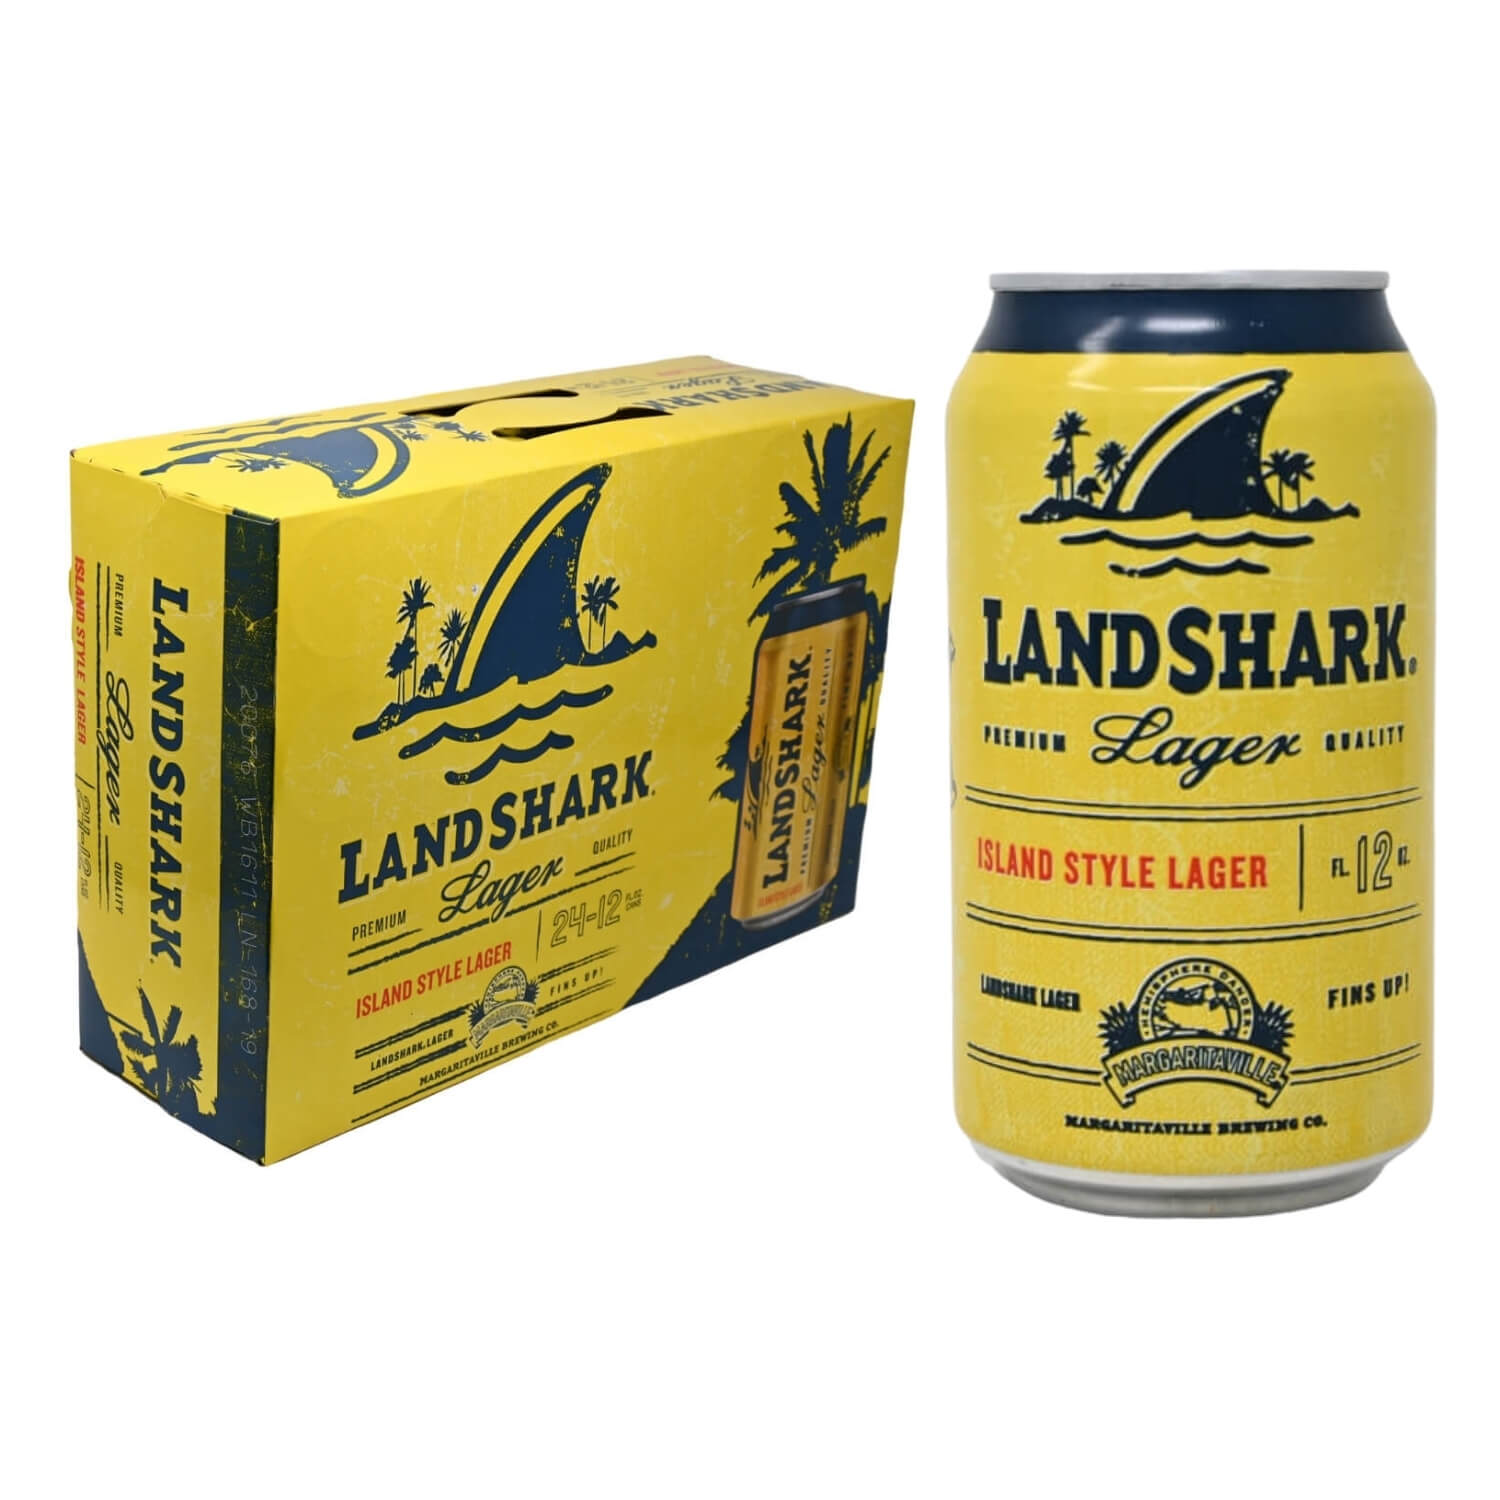 Who Sells Landshark Beer